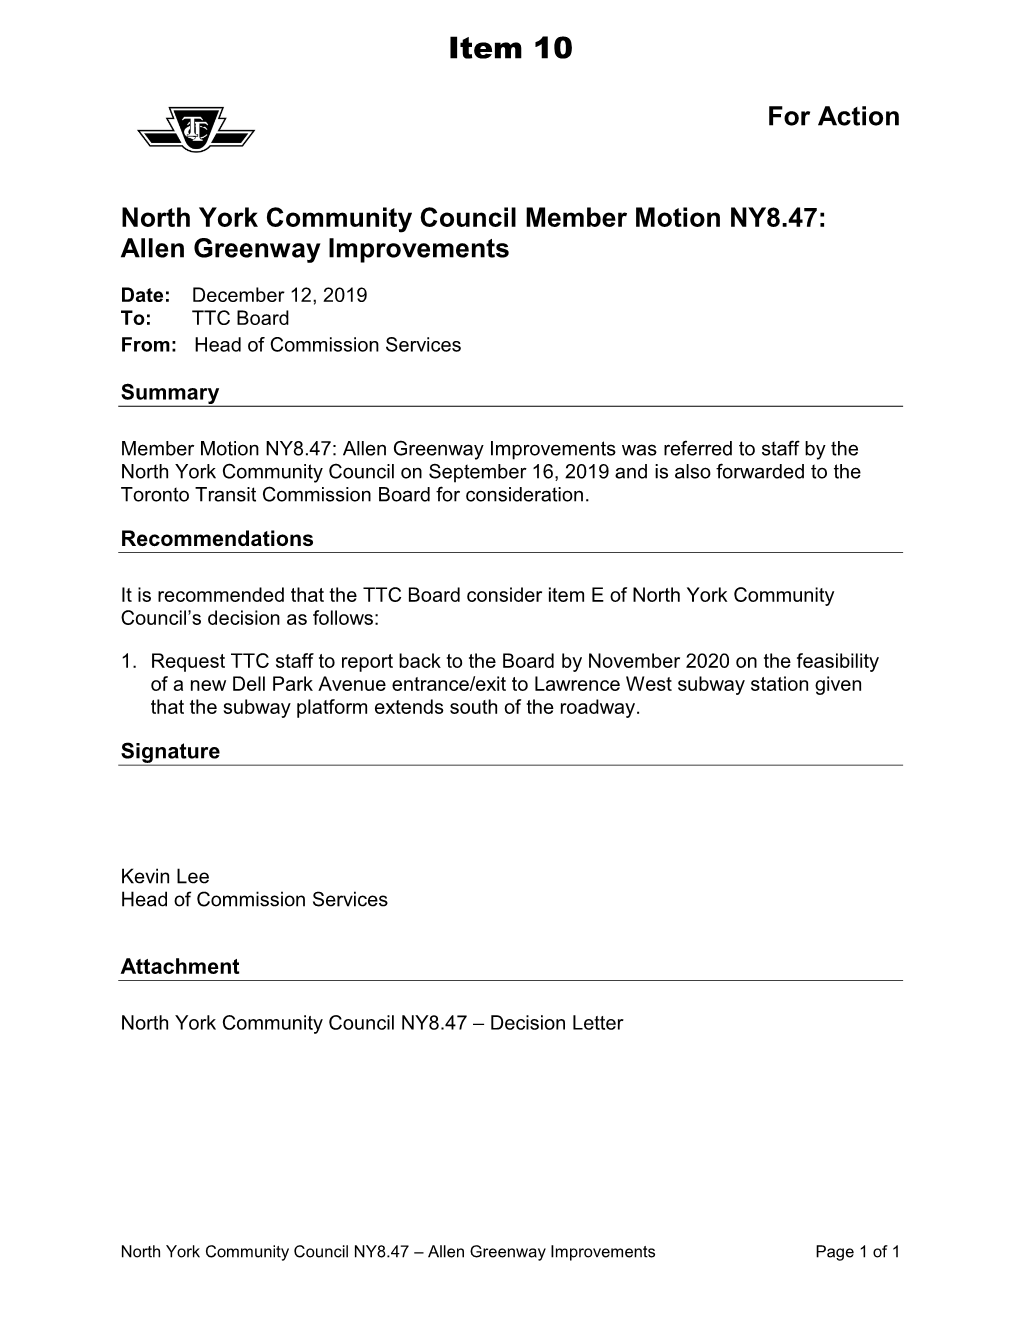 North York Community Council Member Motion NY8.47: Allen Greenway Improvements